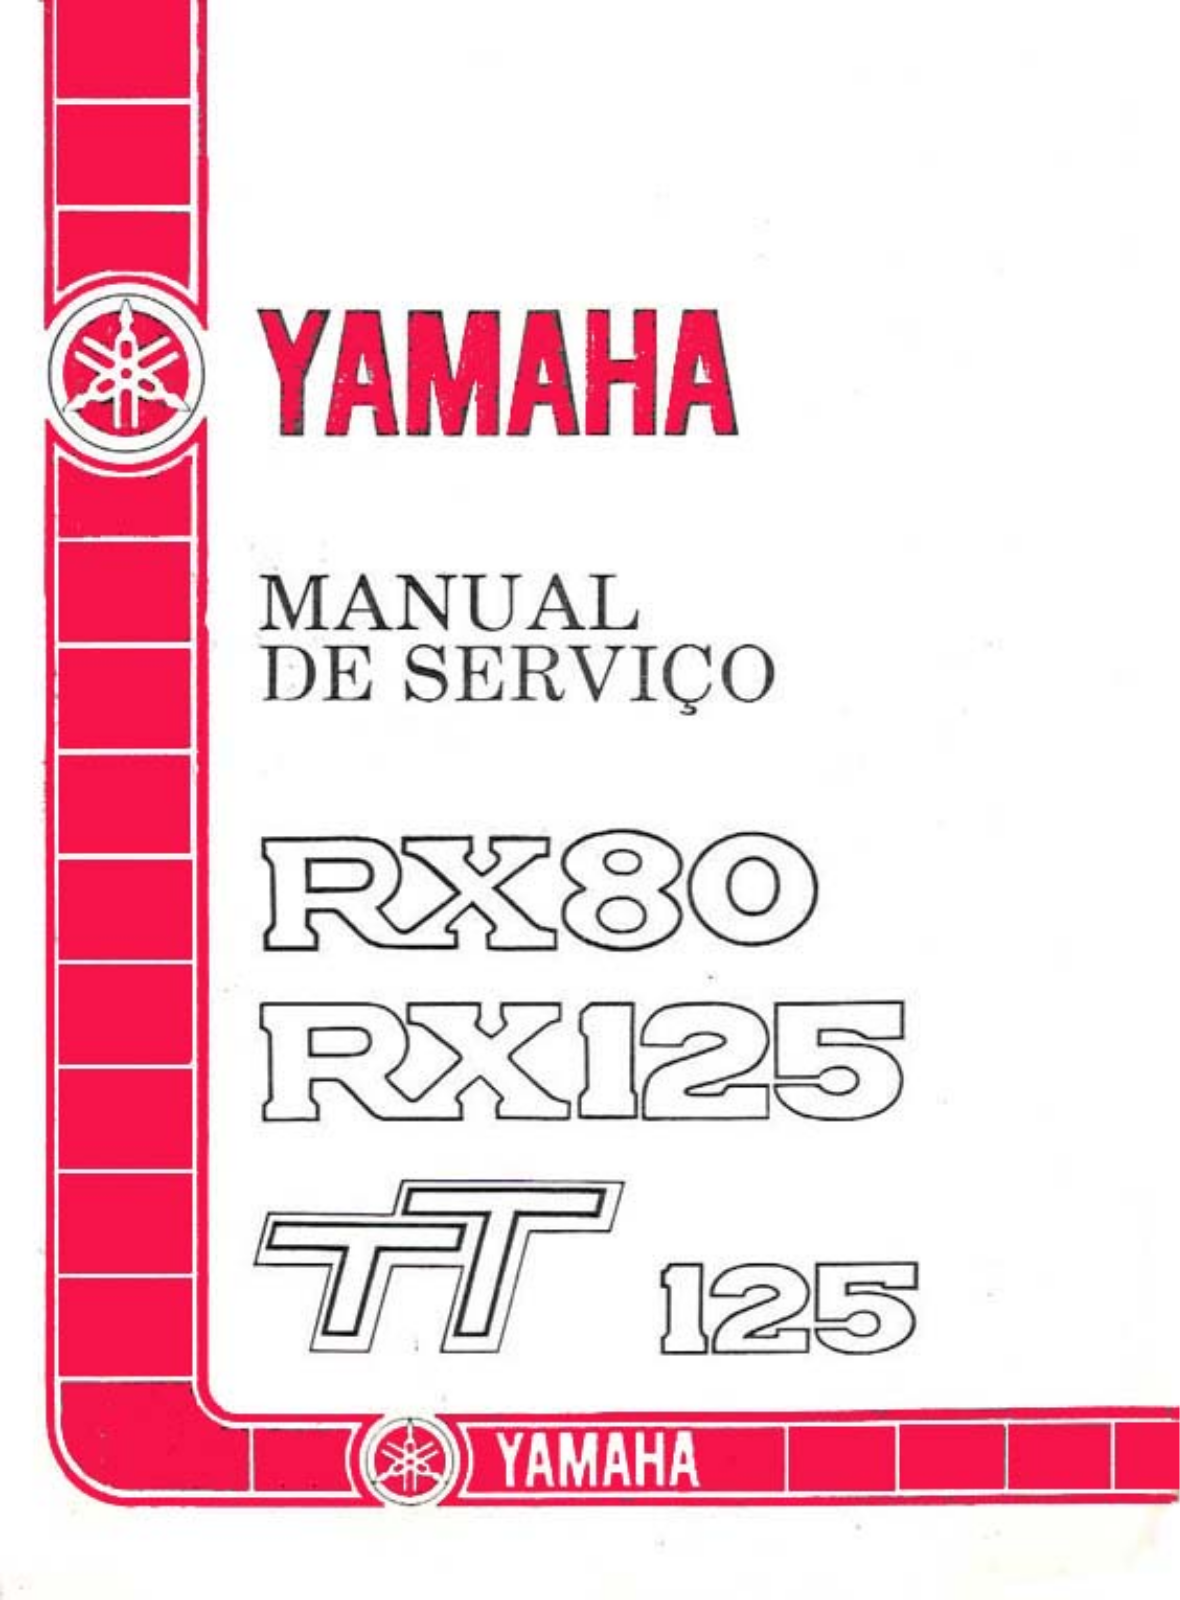 Yamaha RX 80, RX 125, TT125 Service Manual